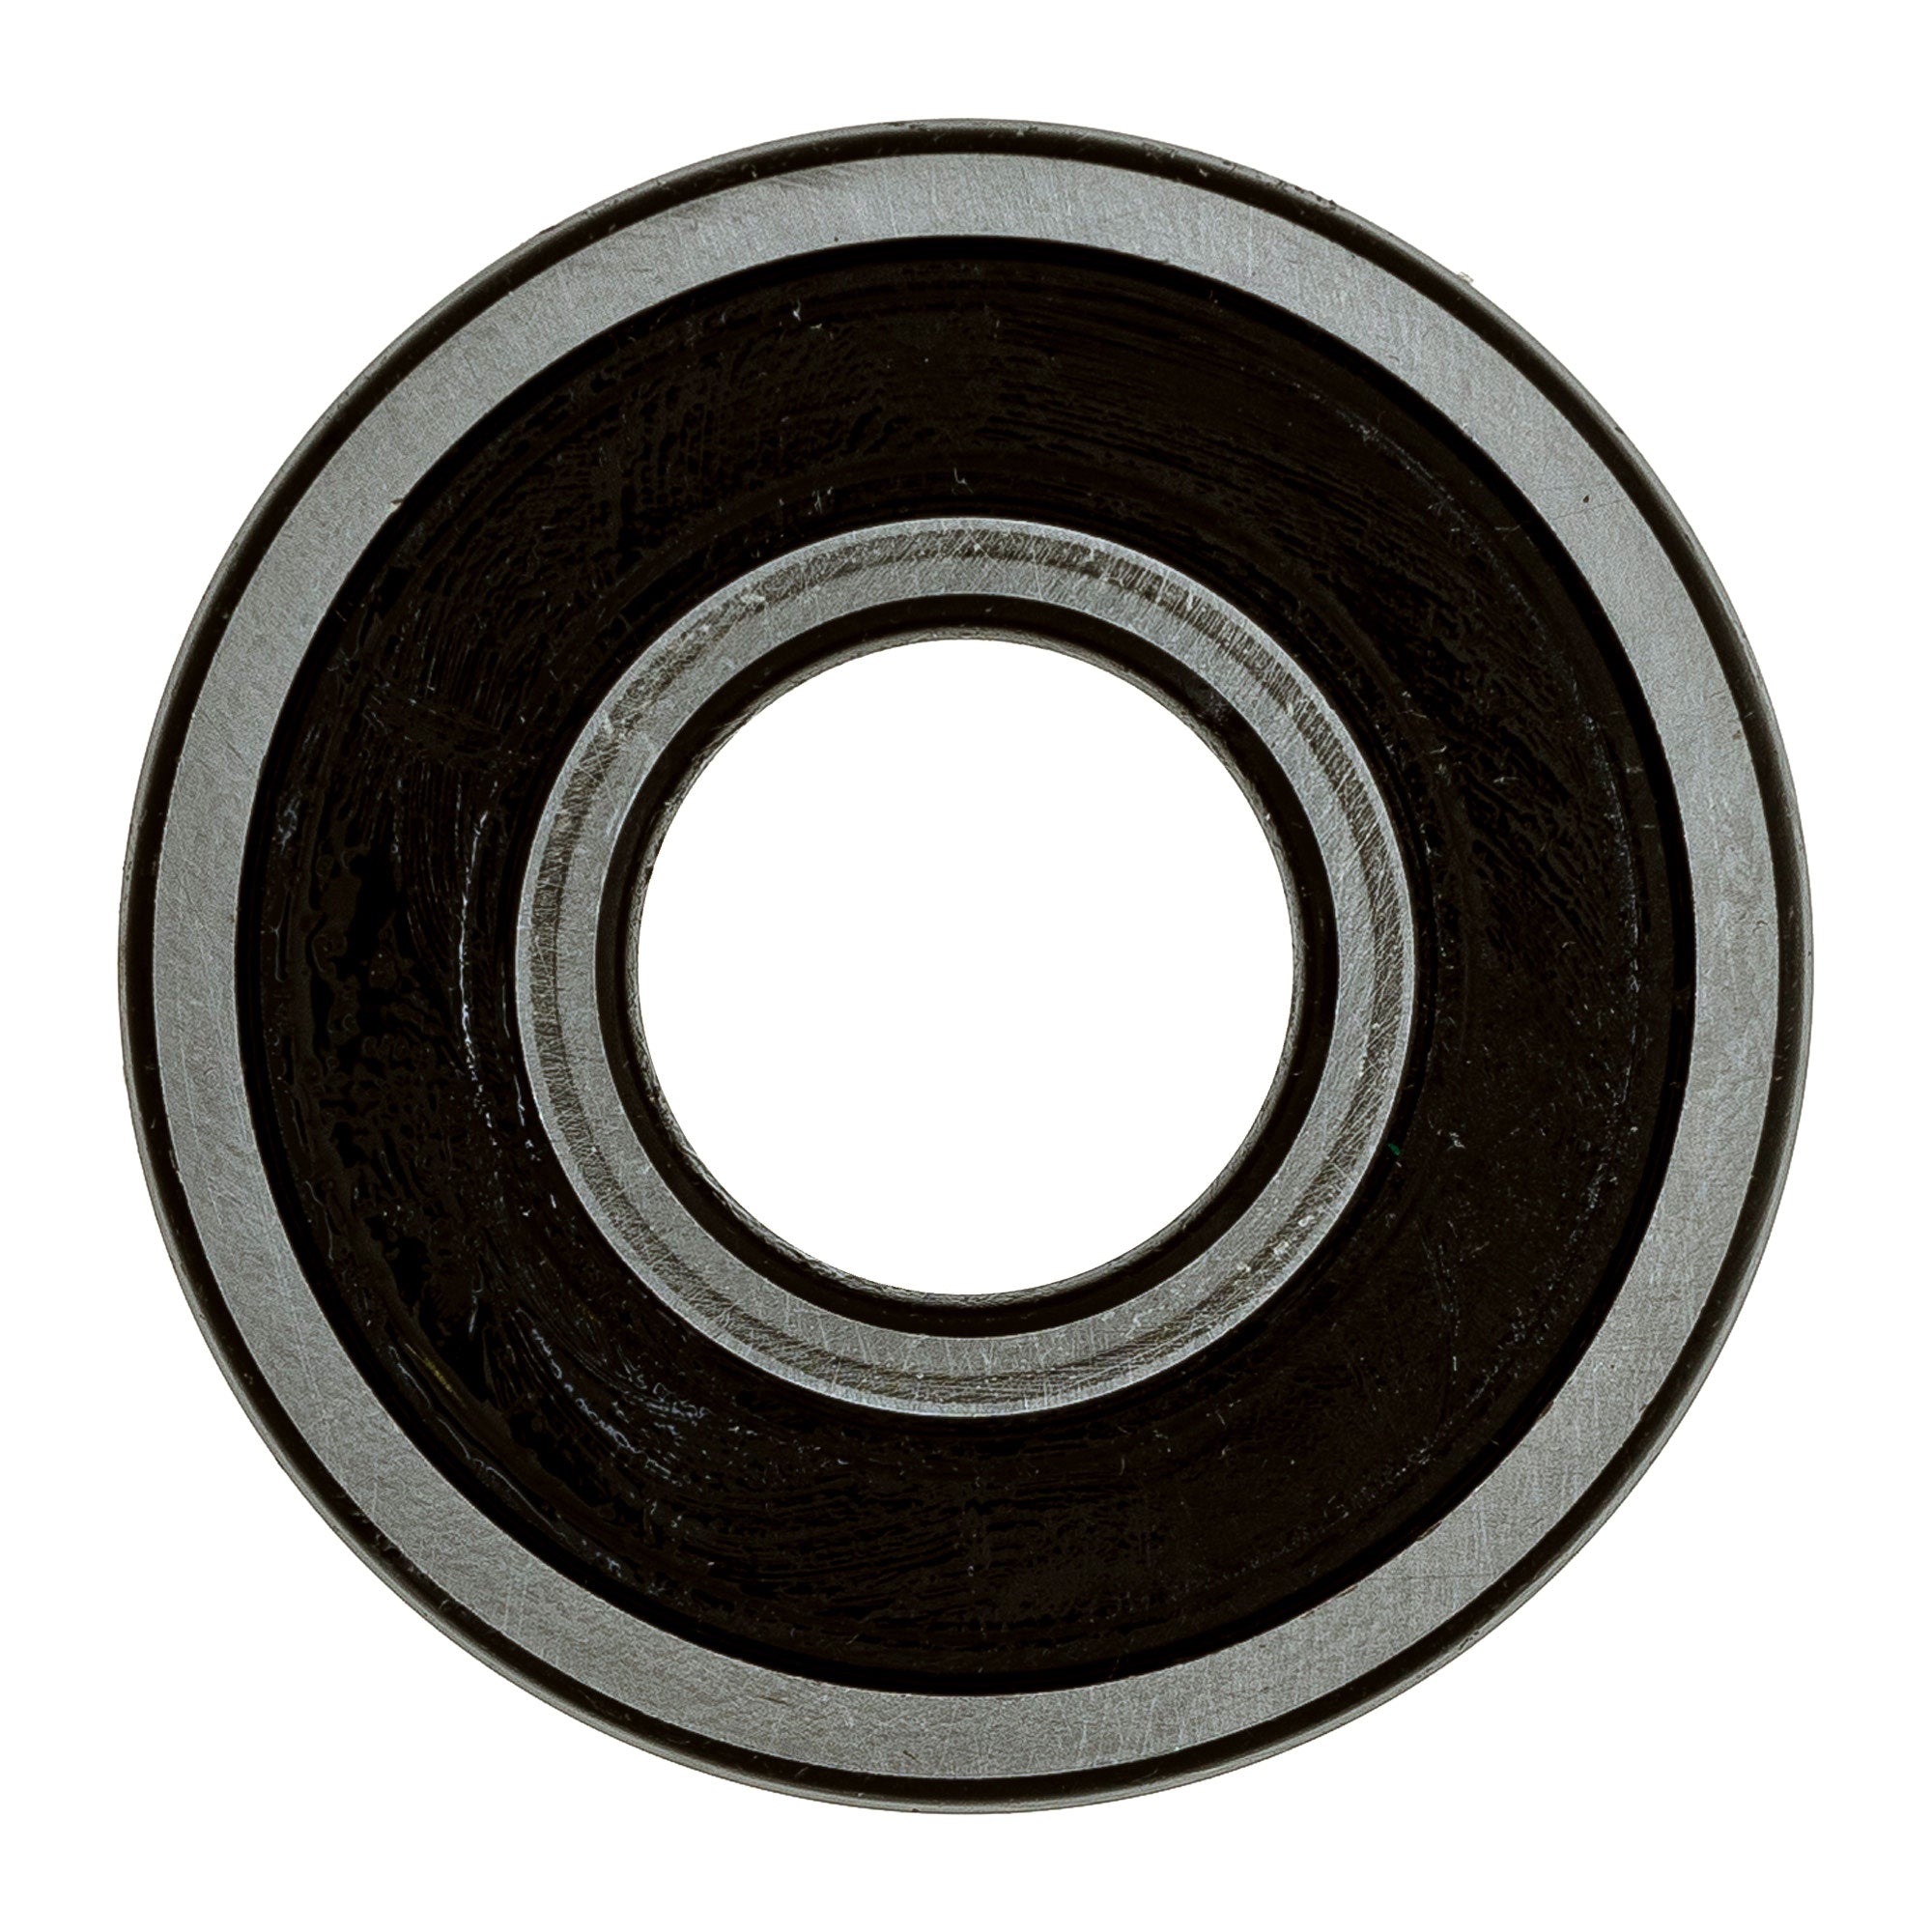 Wheel Bearing for Yamaha Road Star Raider 93306-30446-00 20x52x15mm 2